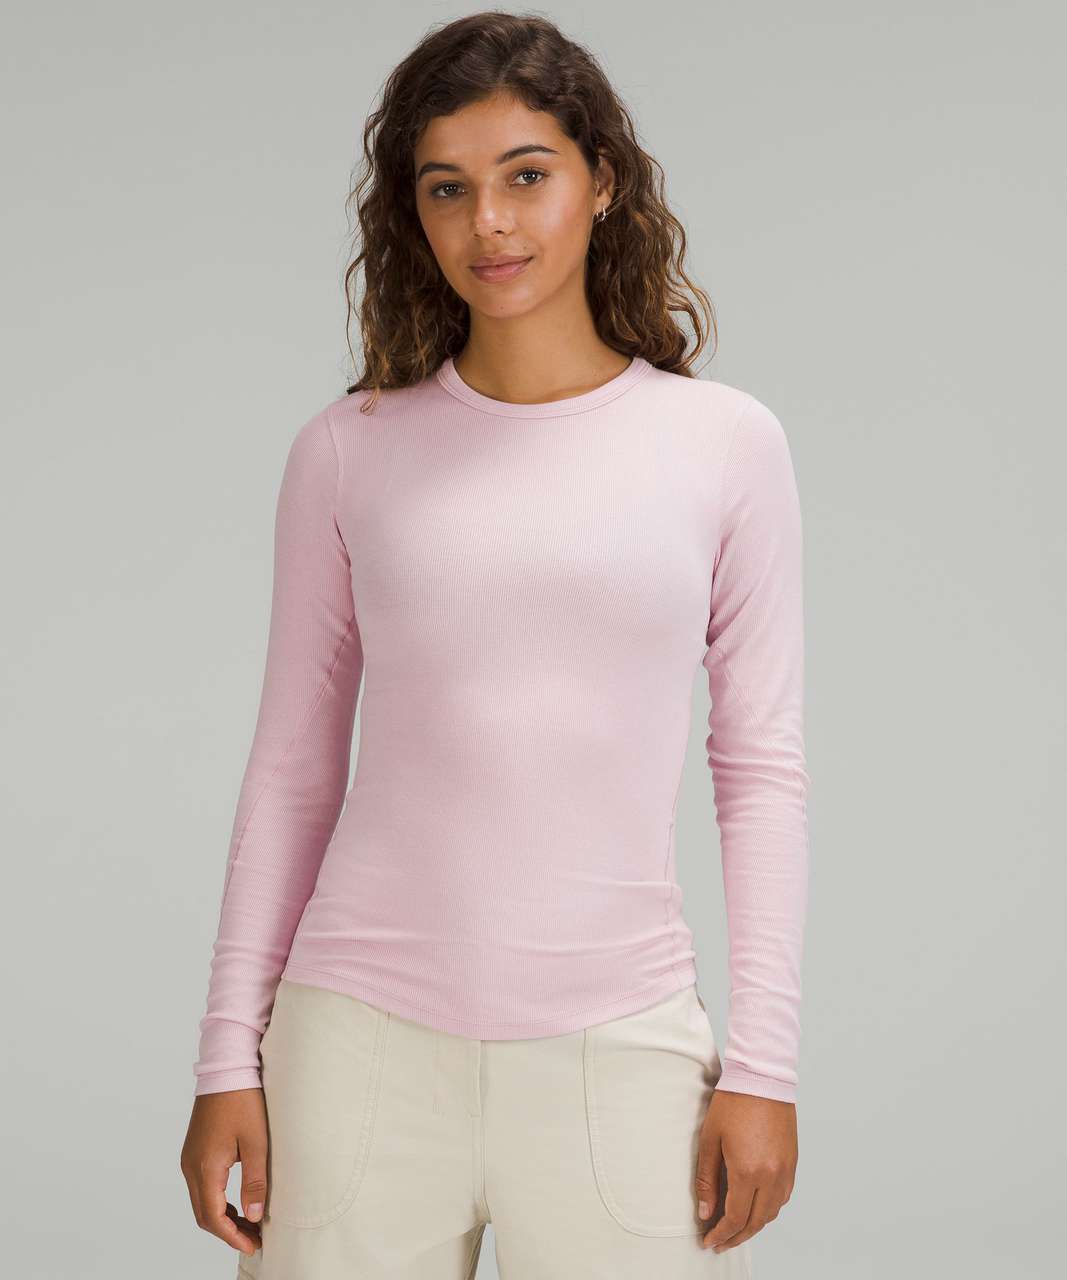 https://storage.googleapis.com/lulu-fanatics/product/79063/1280/lululemon-hold-tight-long-sleeve-shirt-pink-peony-056496-420362.jpg